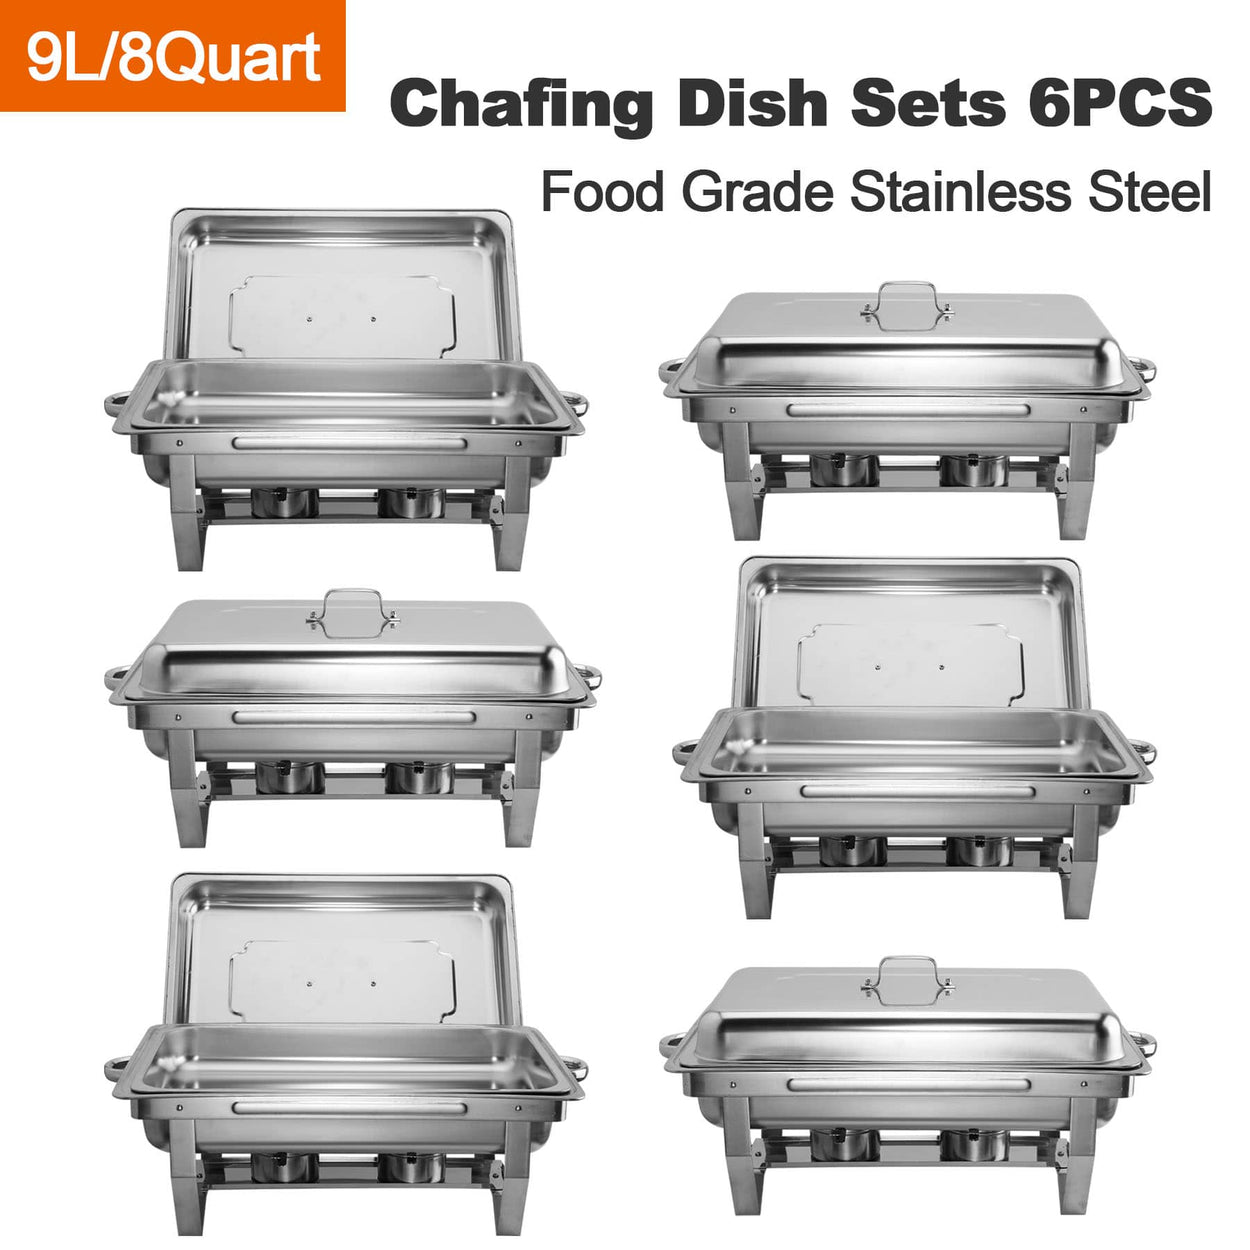 Rectangular-Dish-Catering-Pan-Stainless-Steel